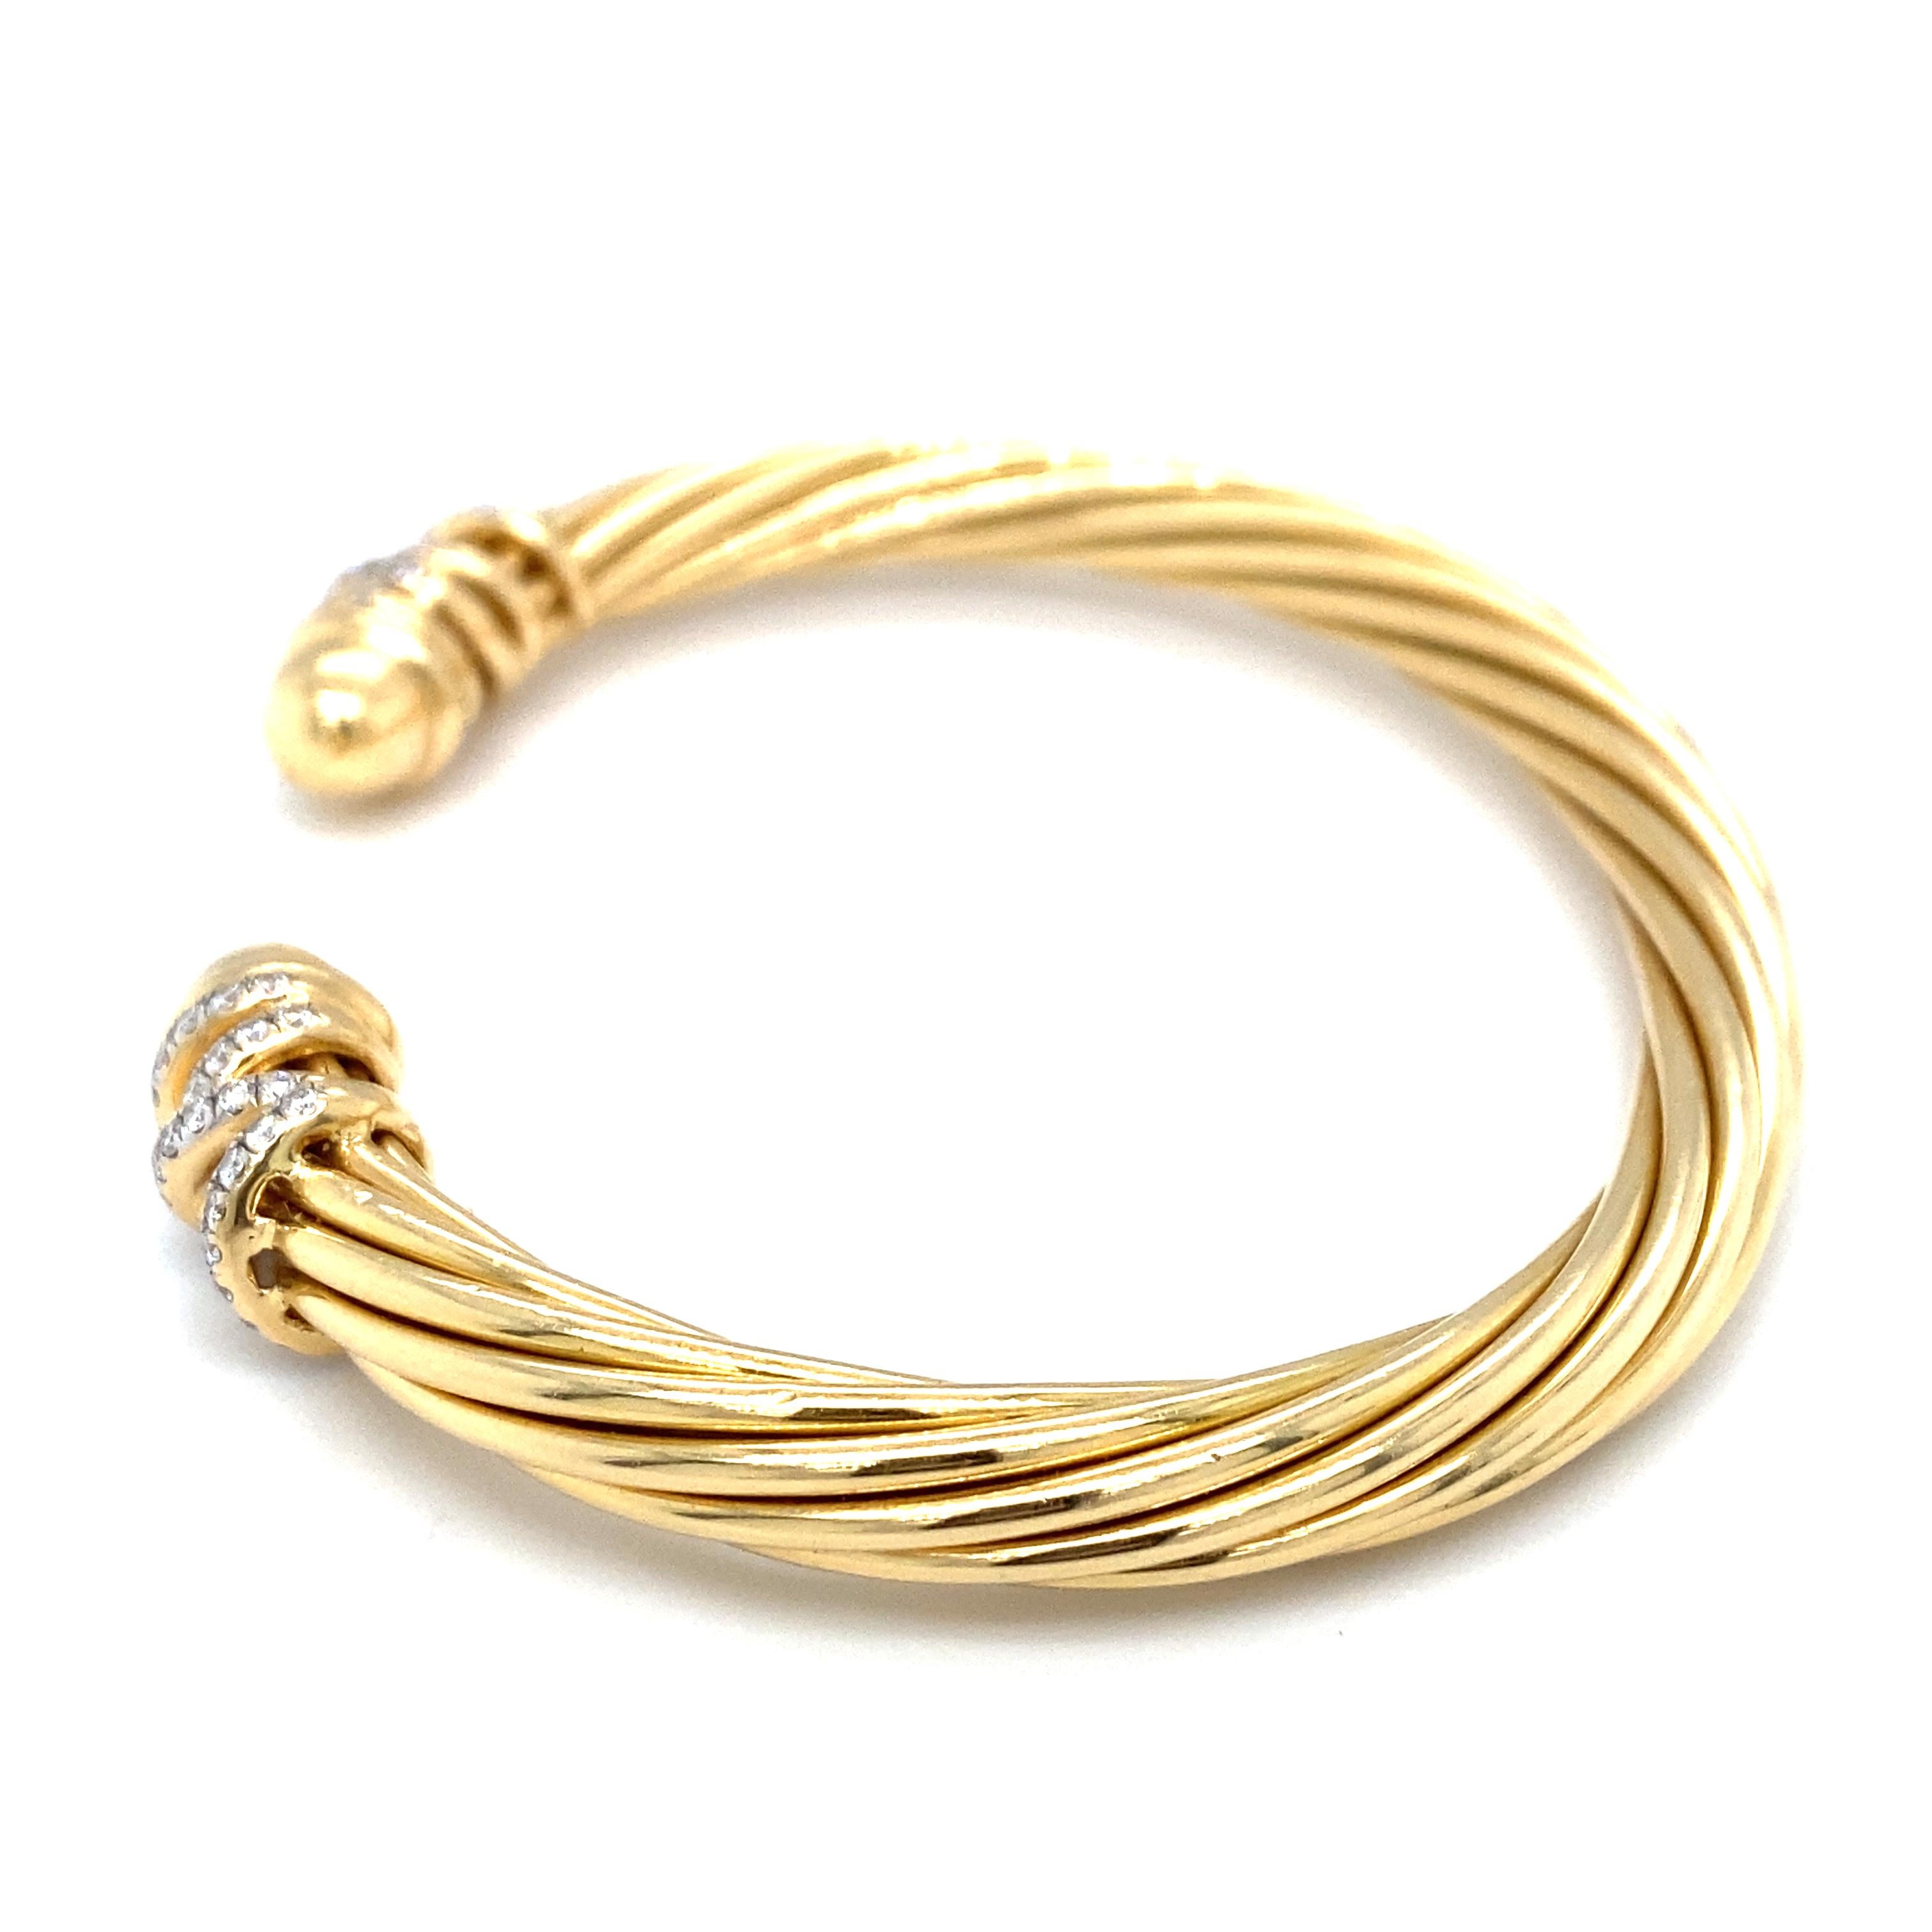 David Yurman Helena Diamond Cuff Bracelet in 18 Karat Yellow Gold 2